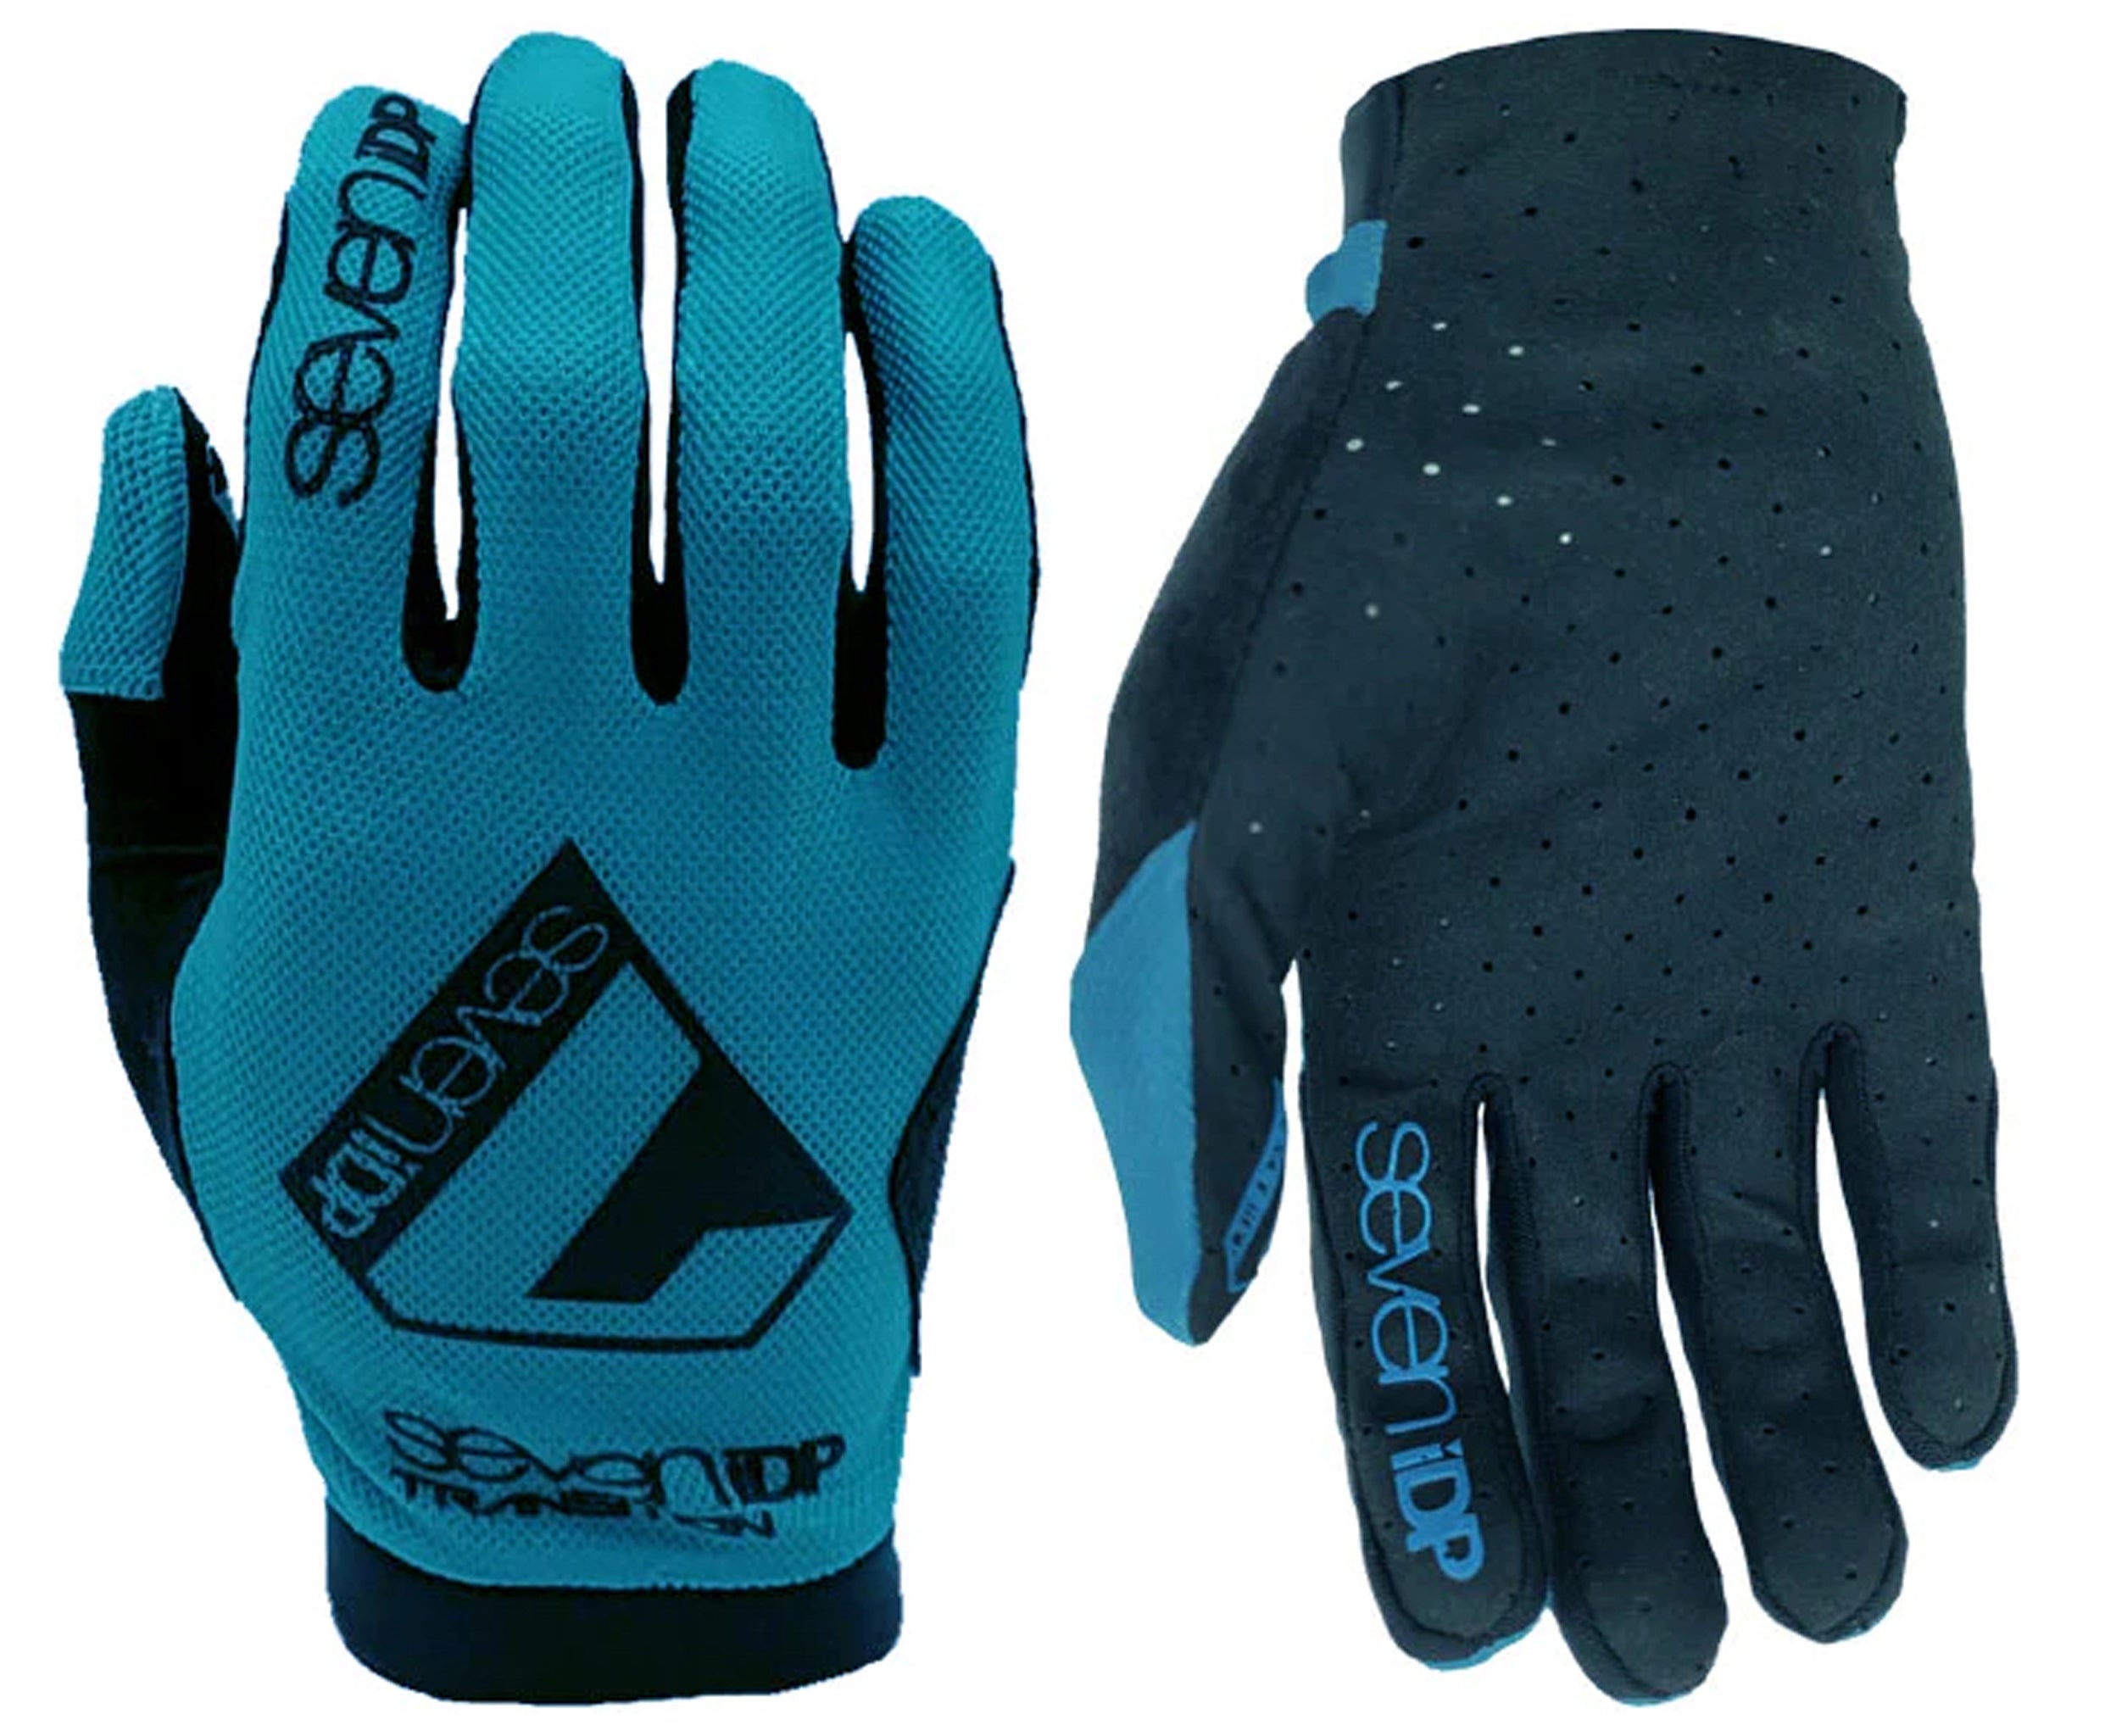 7iDP Transition gloves XL Blue